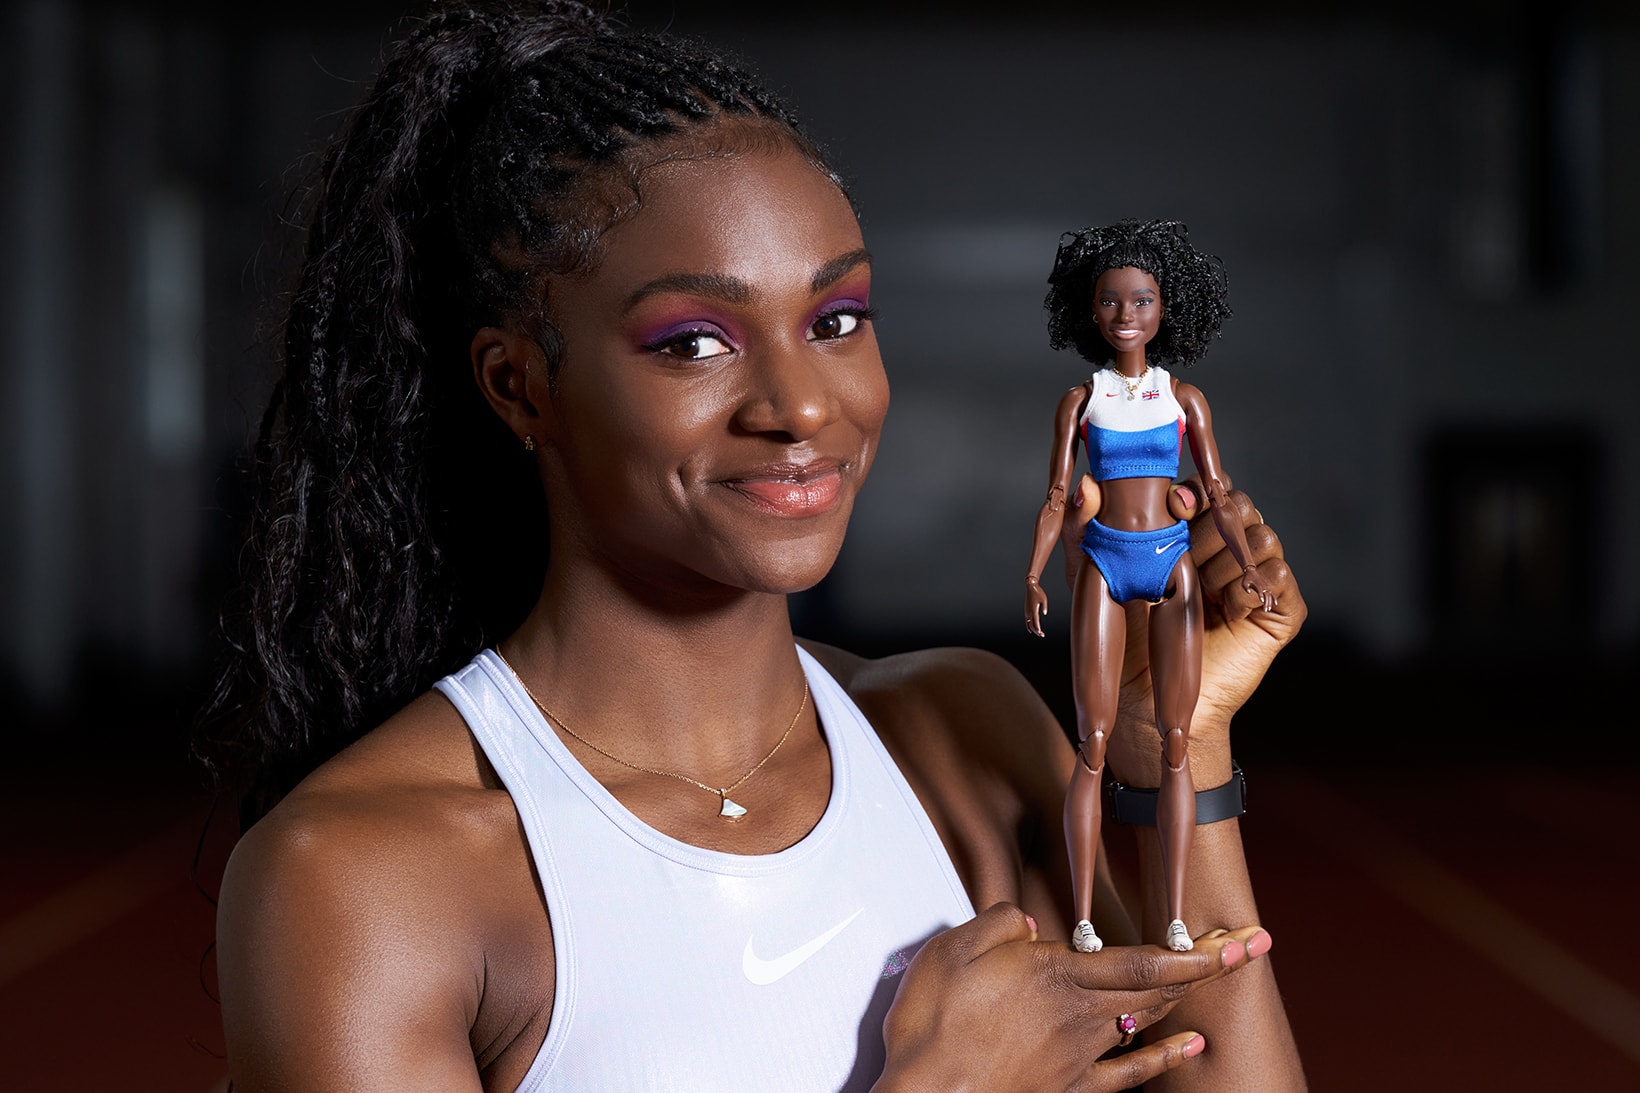 barbie dina asher smith shero doll international womens day dream gap project female empowerment athlete world champion